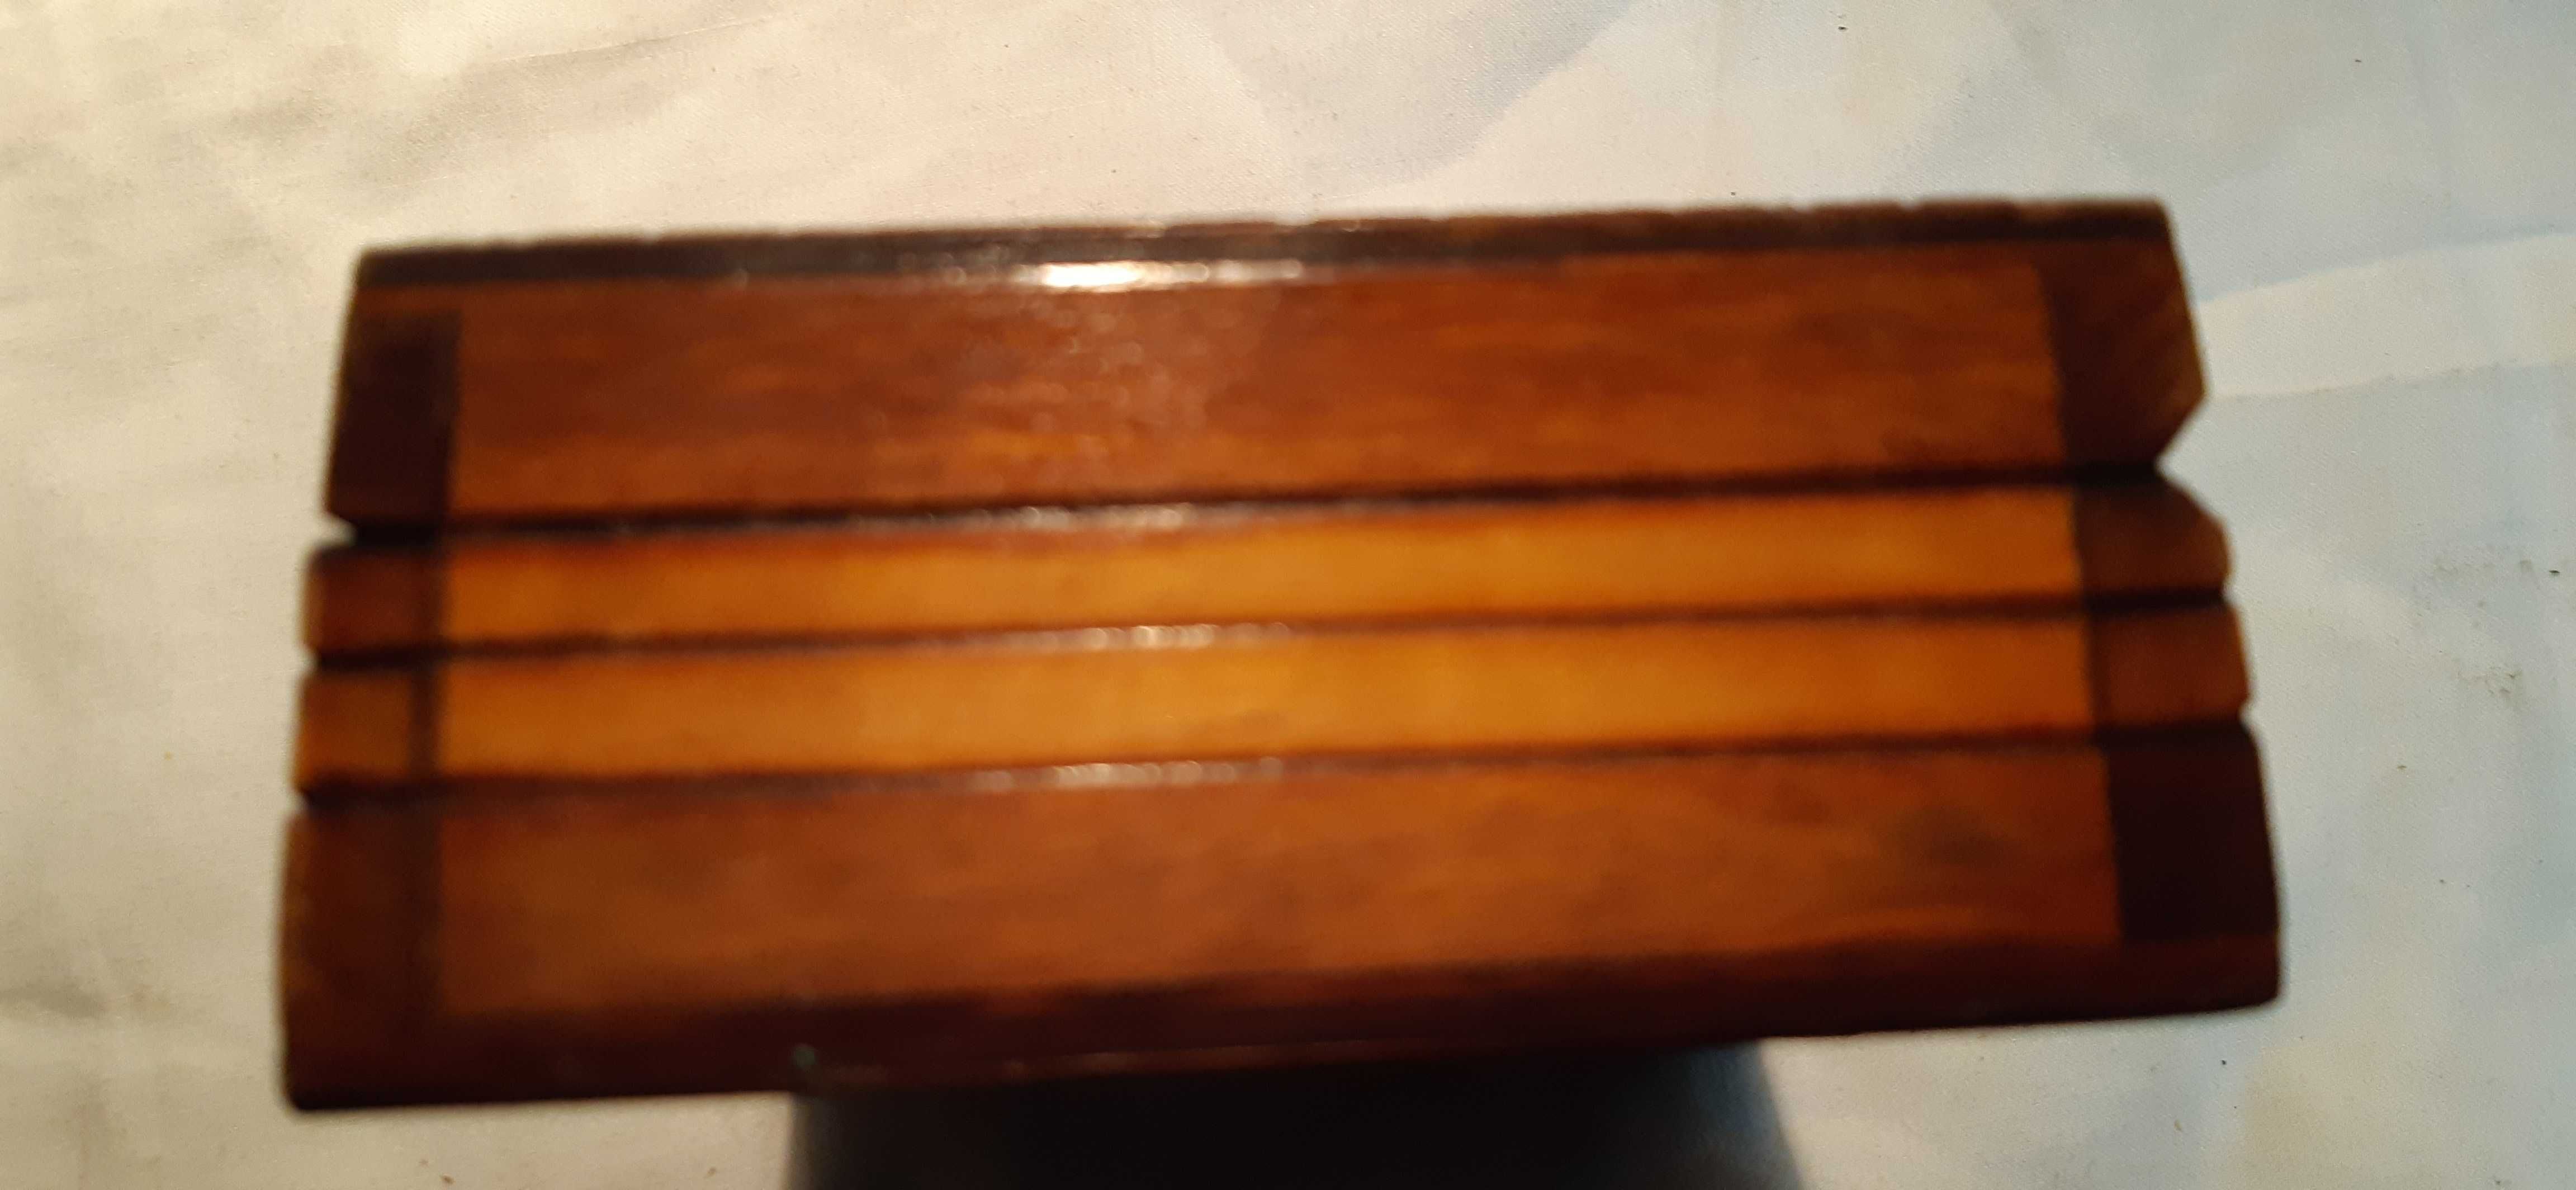 stare góralskie pudełko drewniane